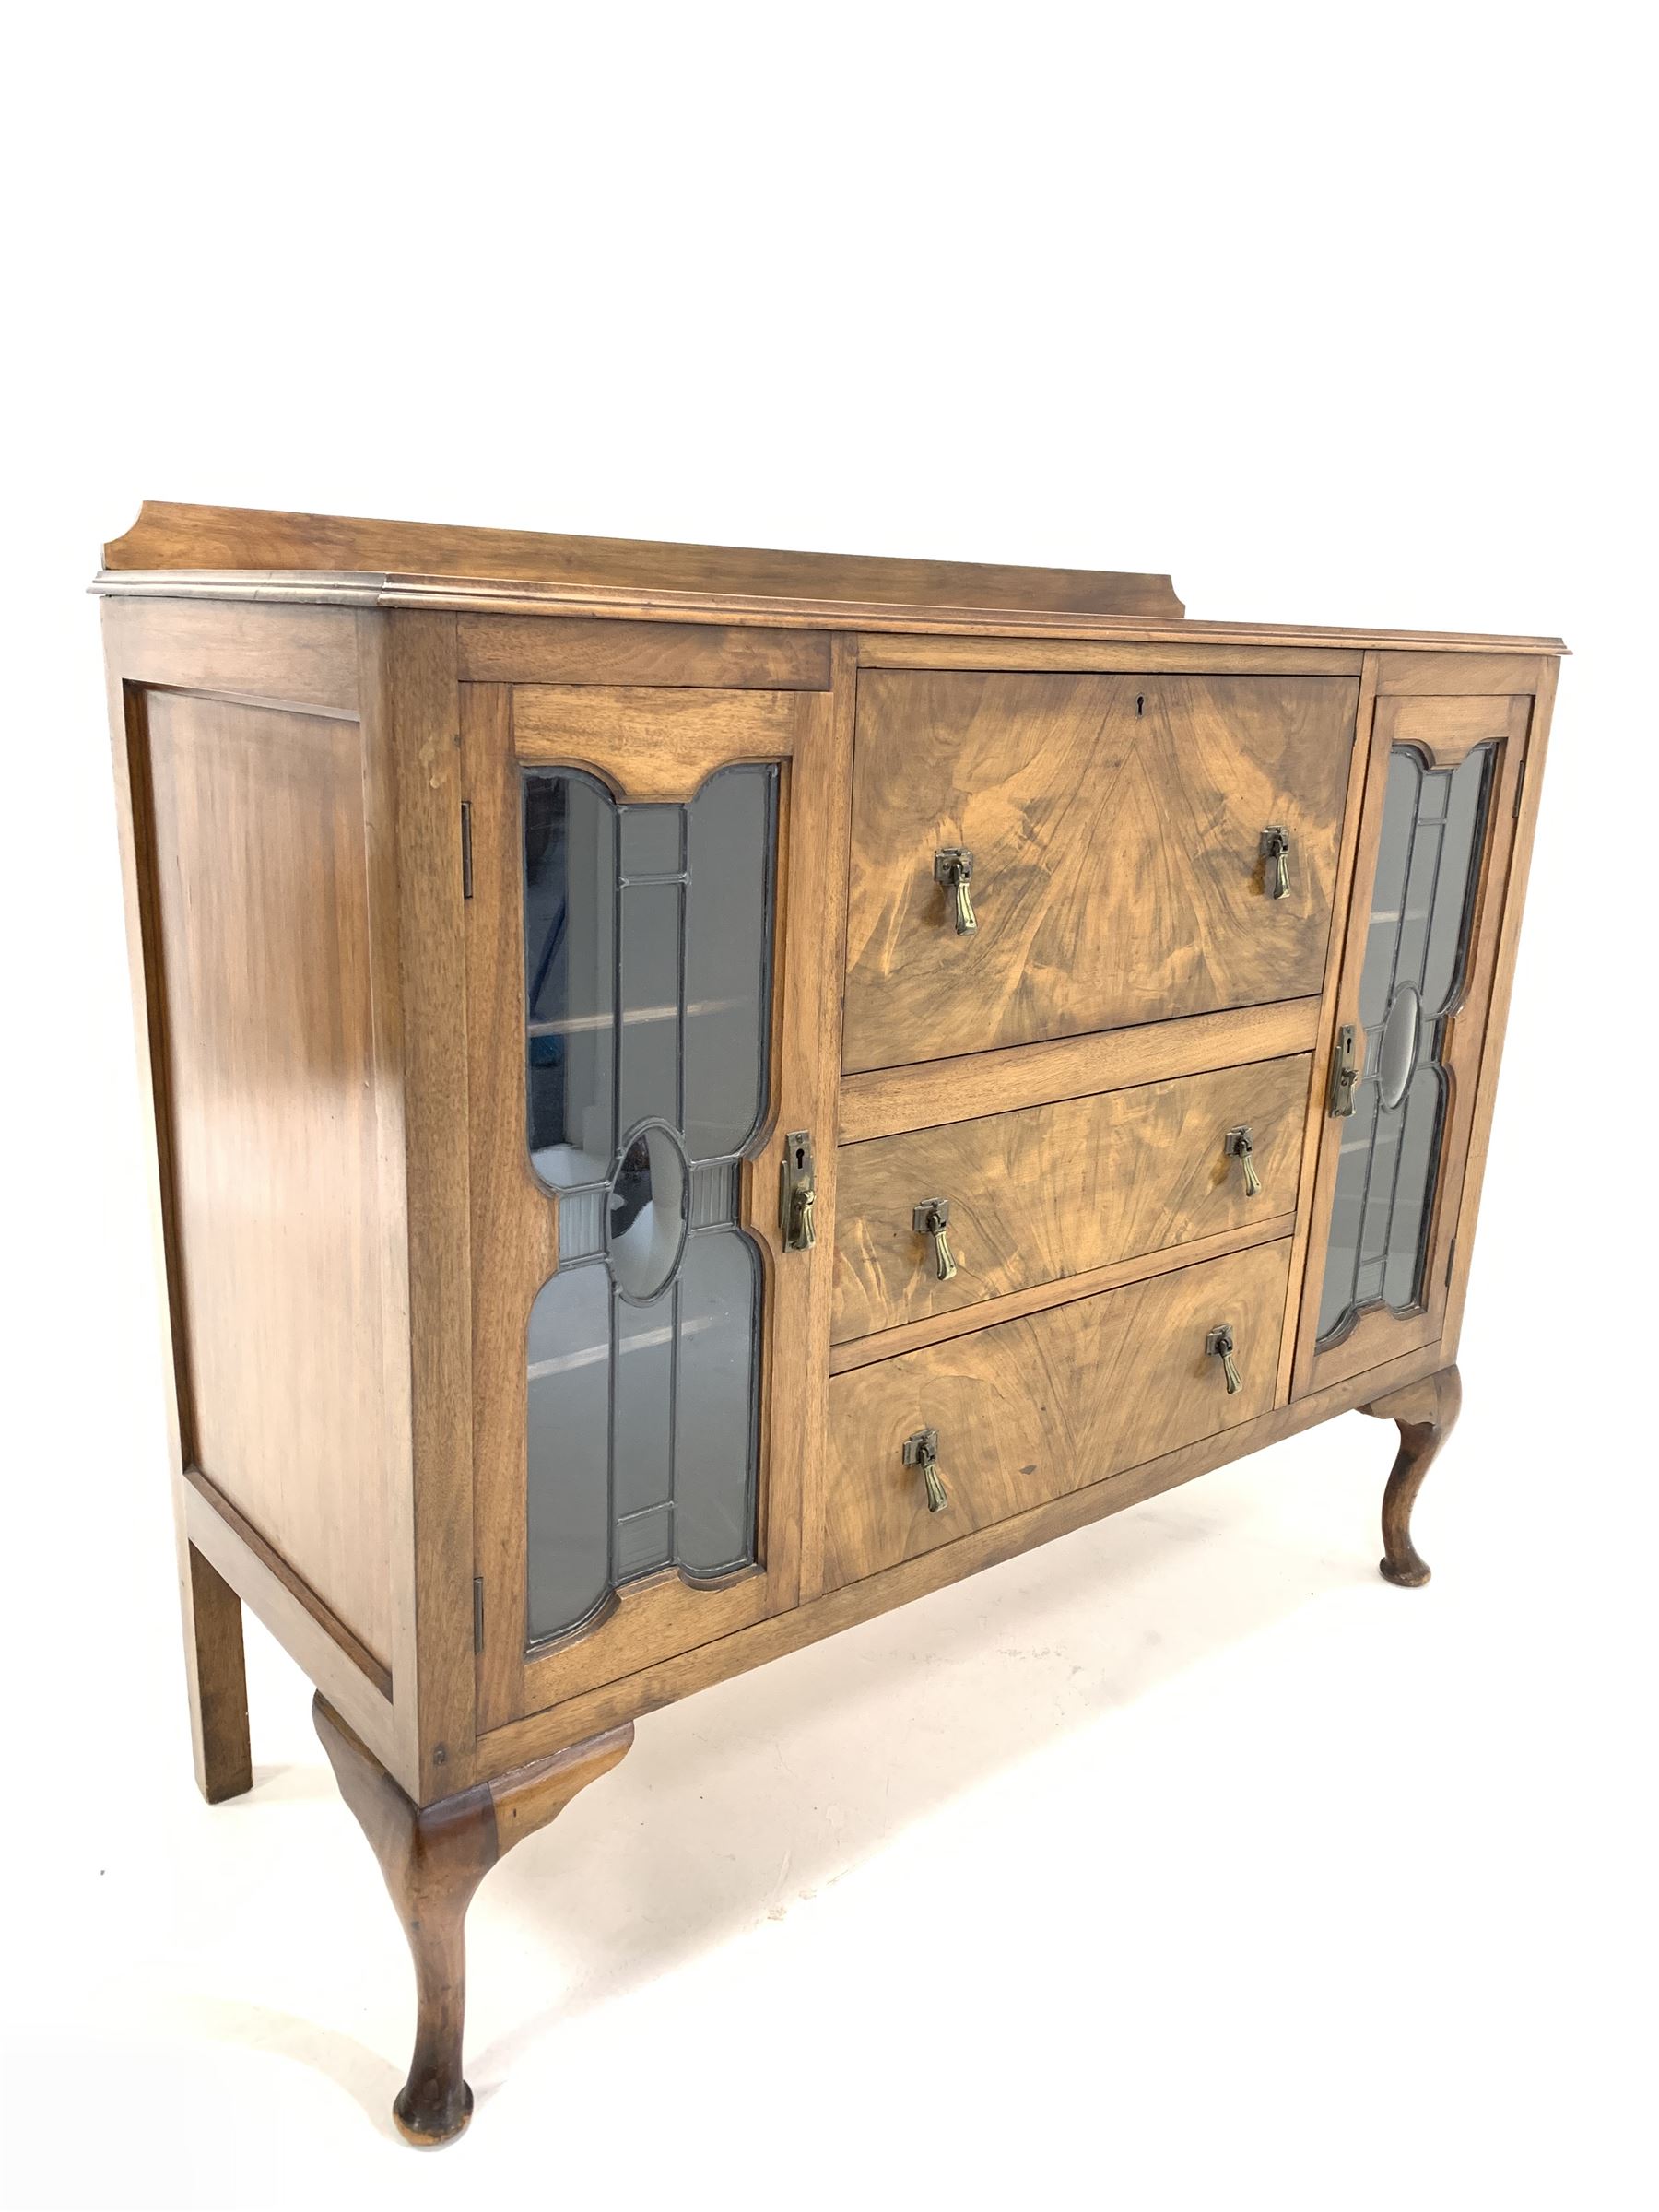 Early 20th century walnut bureau display cabinet - Image 3 of 4